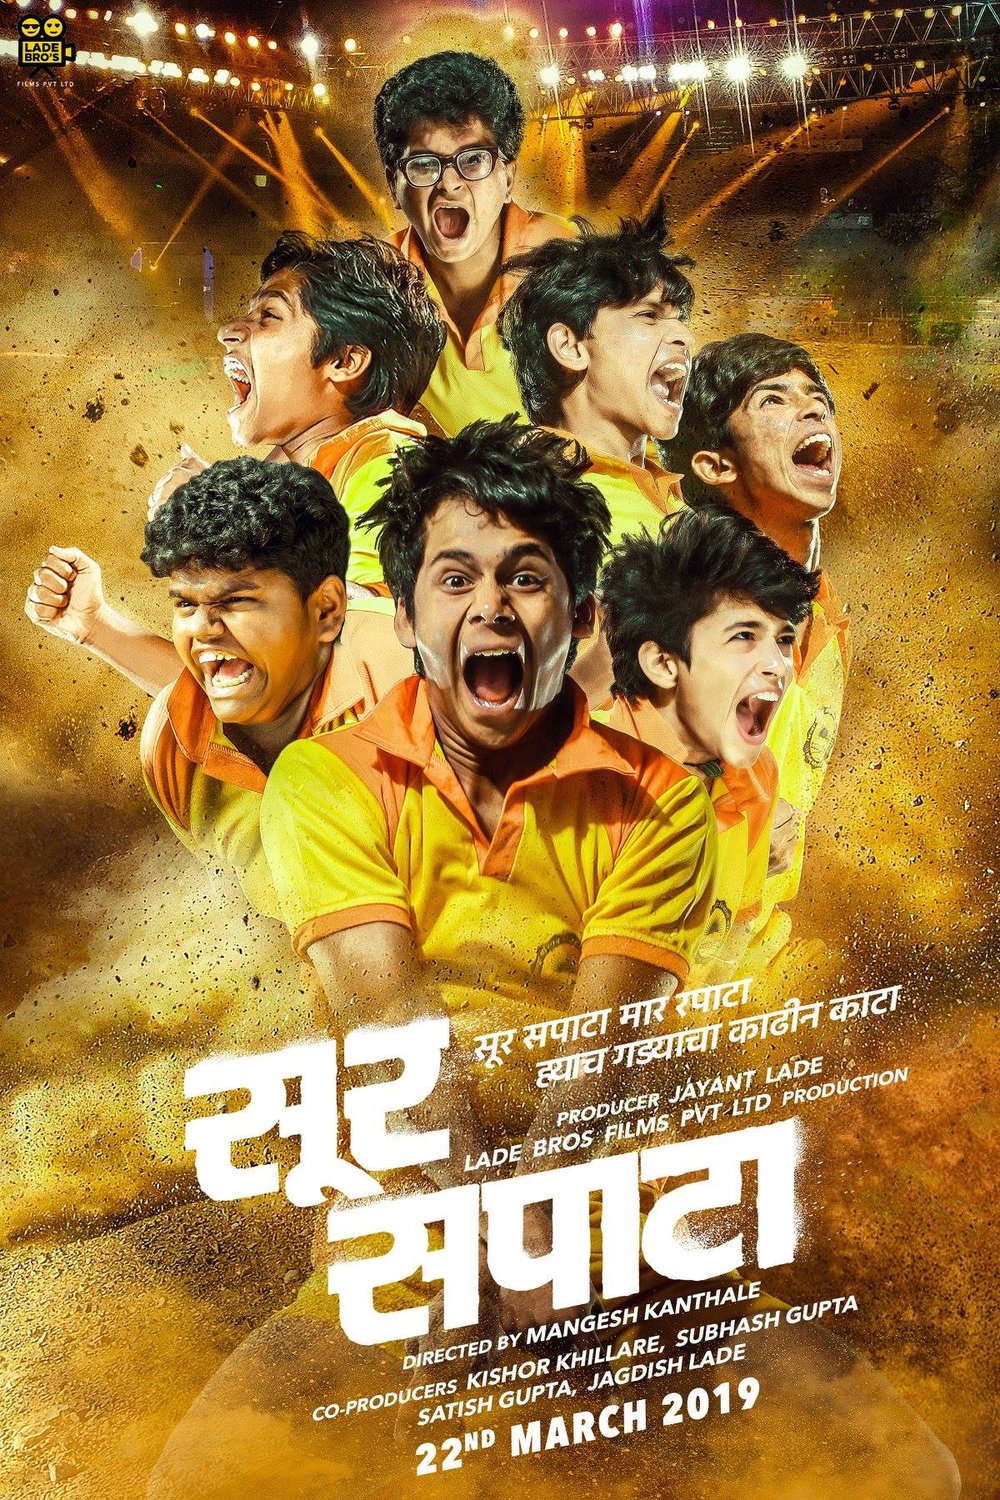 Marathi poster of the movie Sur Sapata